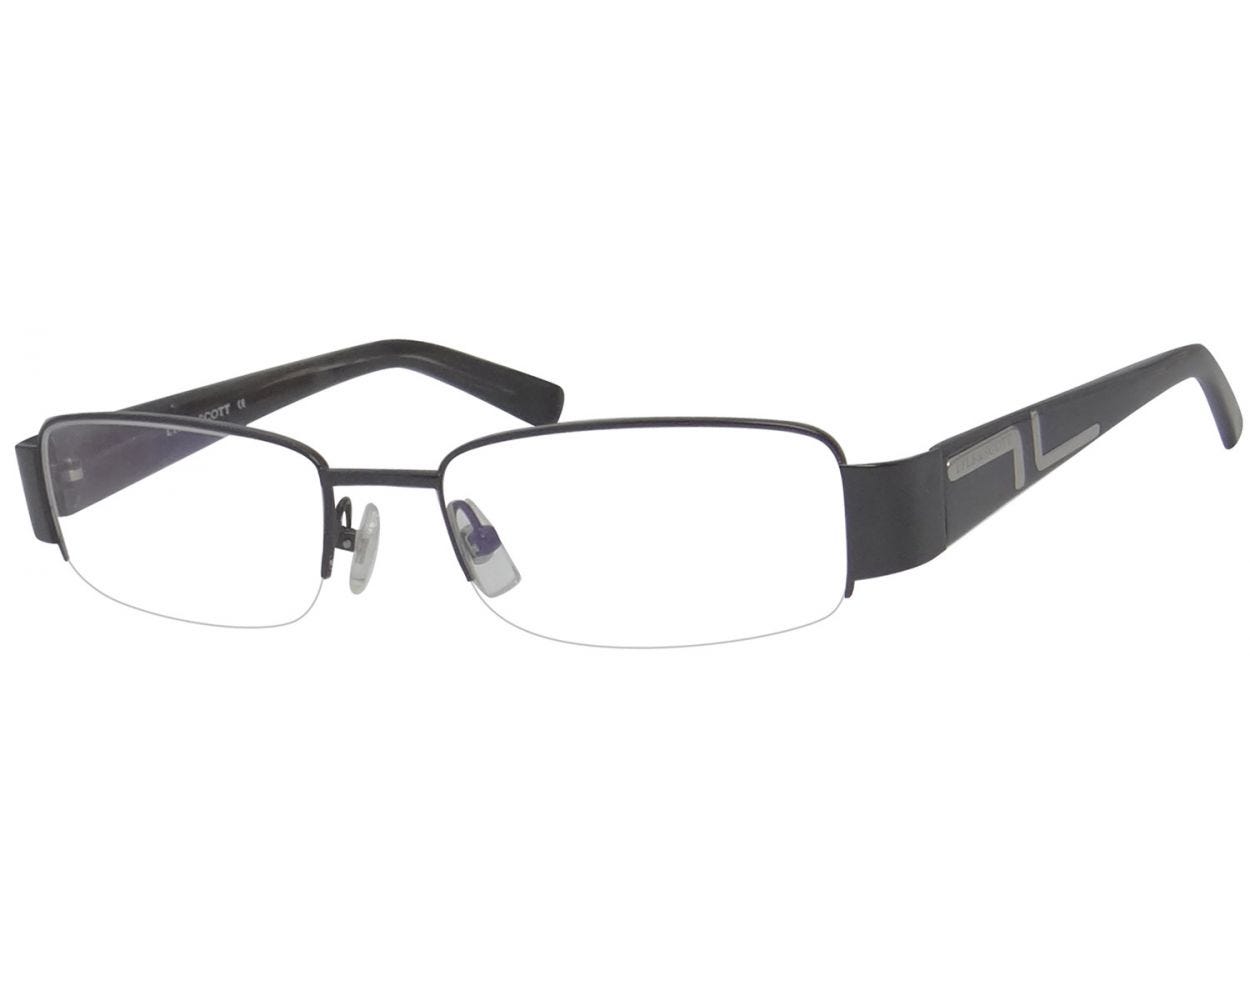 LS3008 Rectangle Eyeglasses Combination Frame